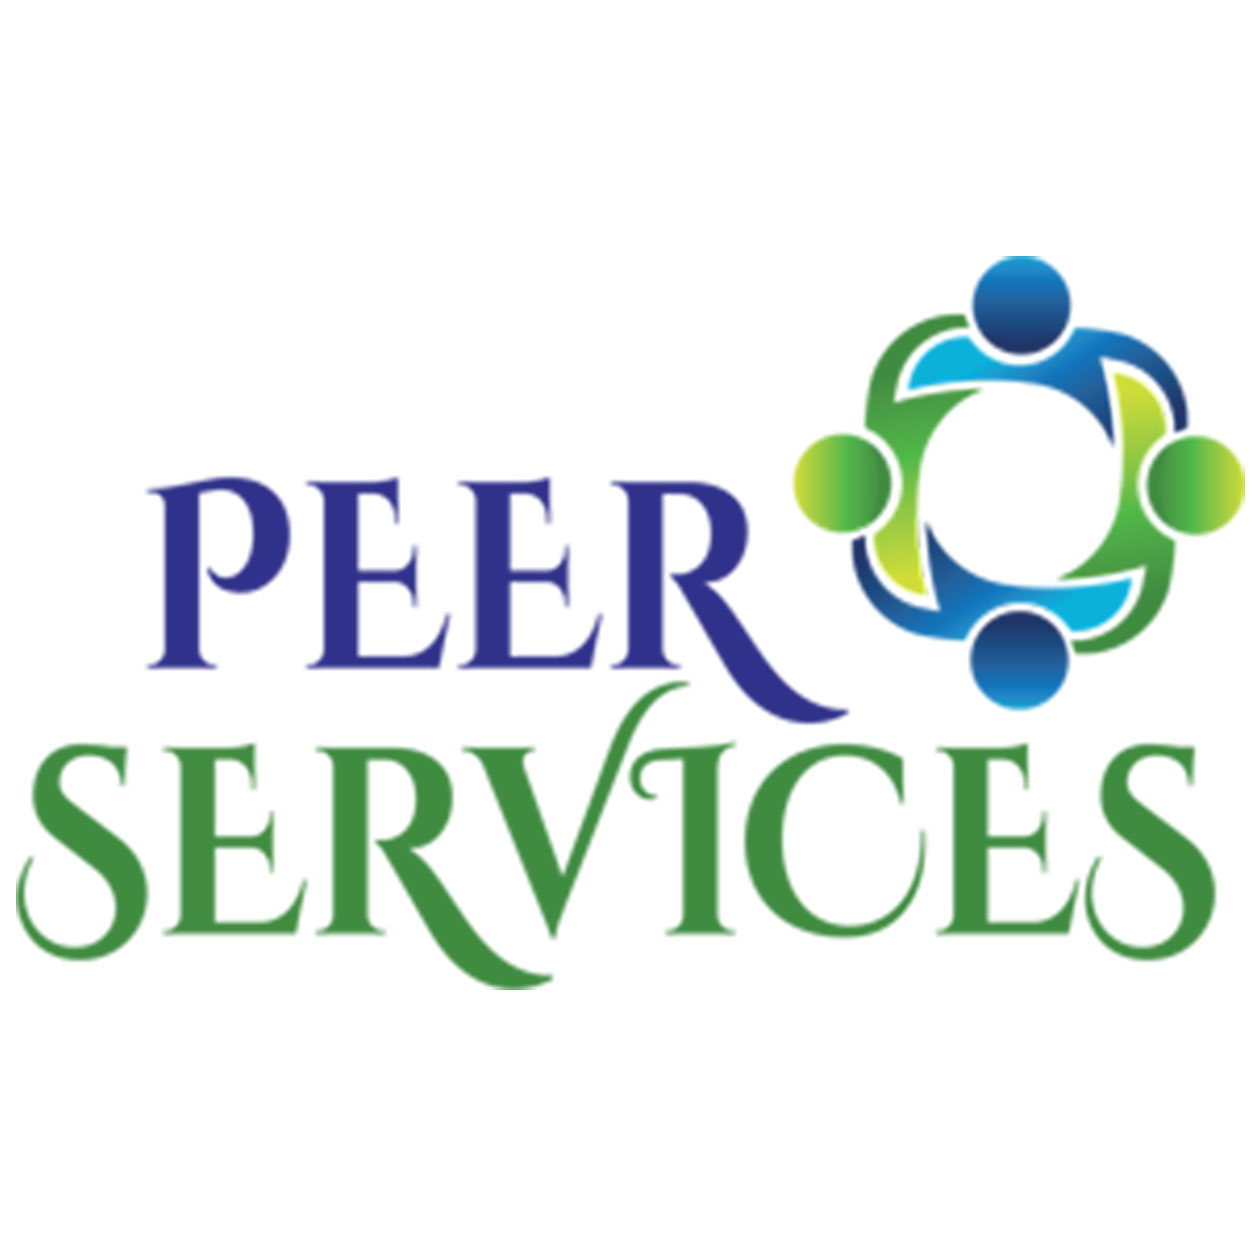 Peer Services logo